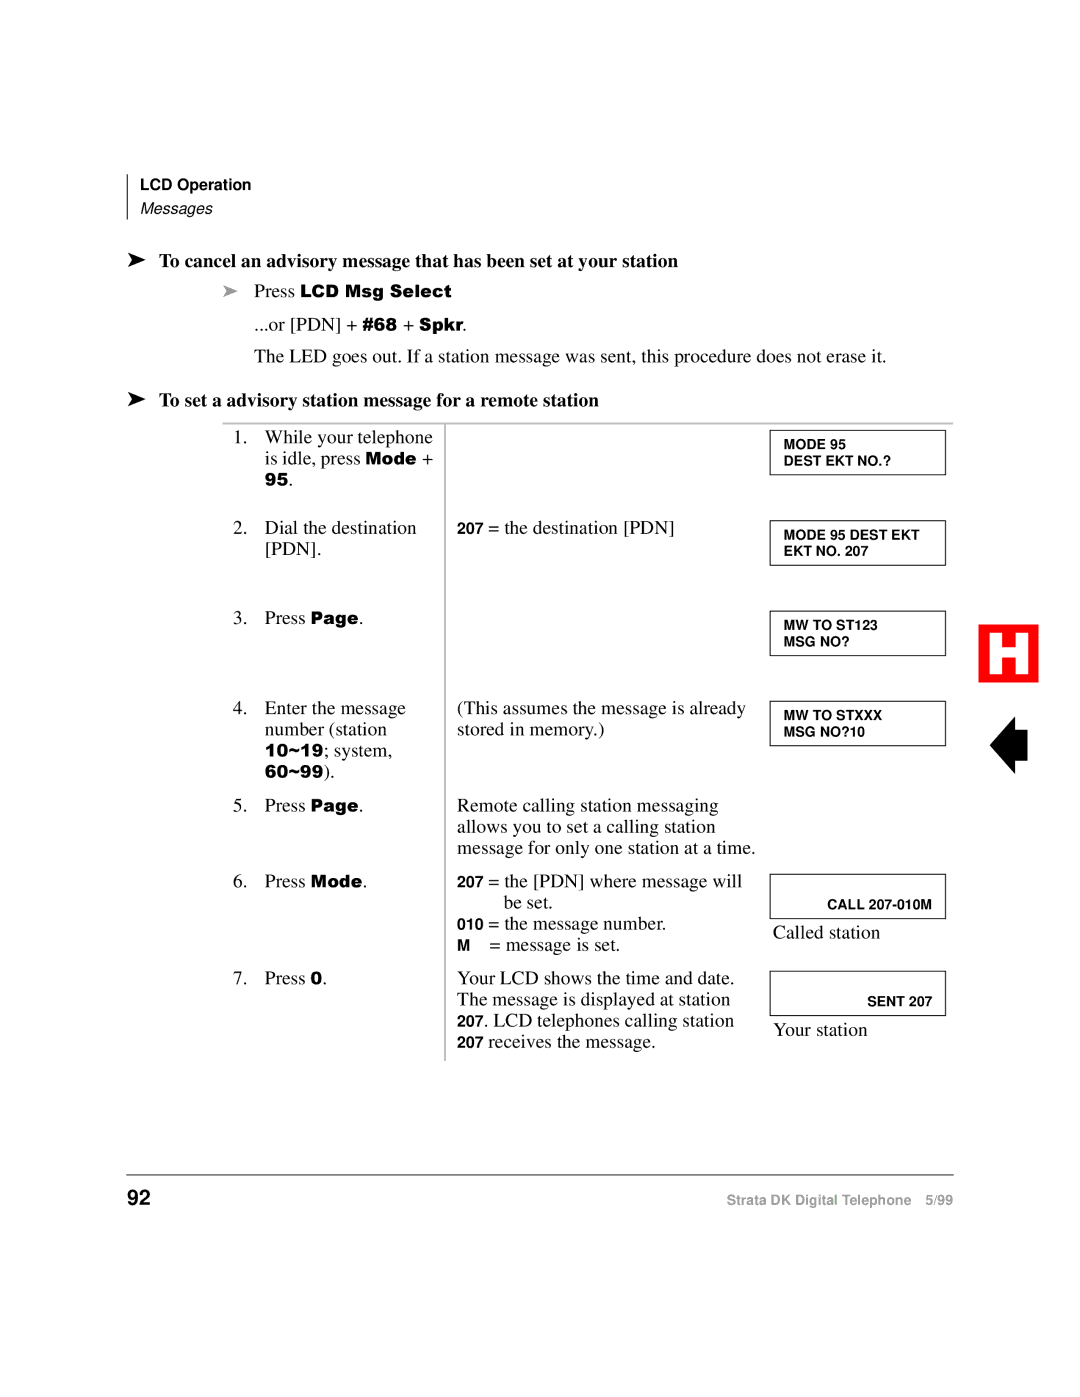 Toshiba Digital Telephone manual To set a advisory station message for a remote station 